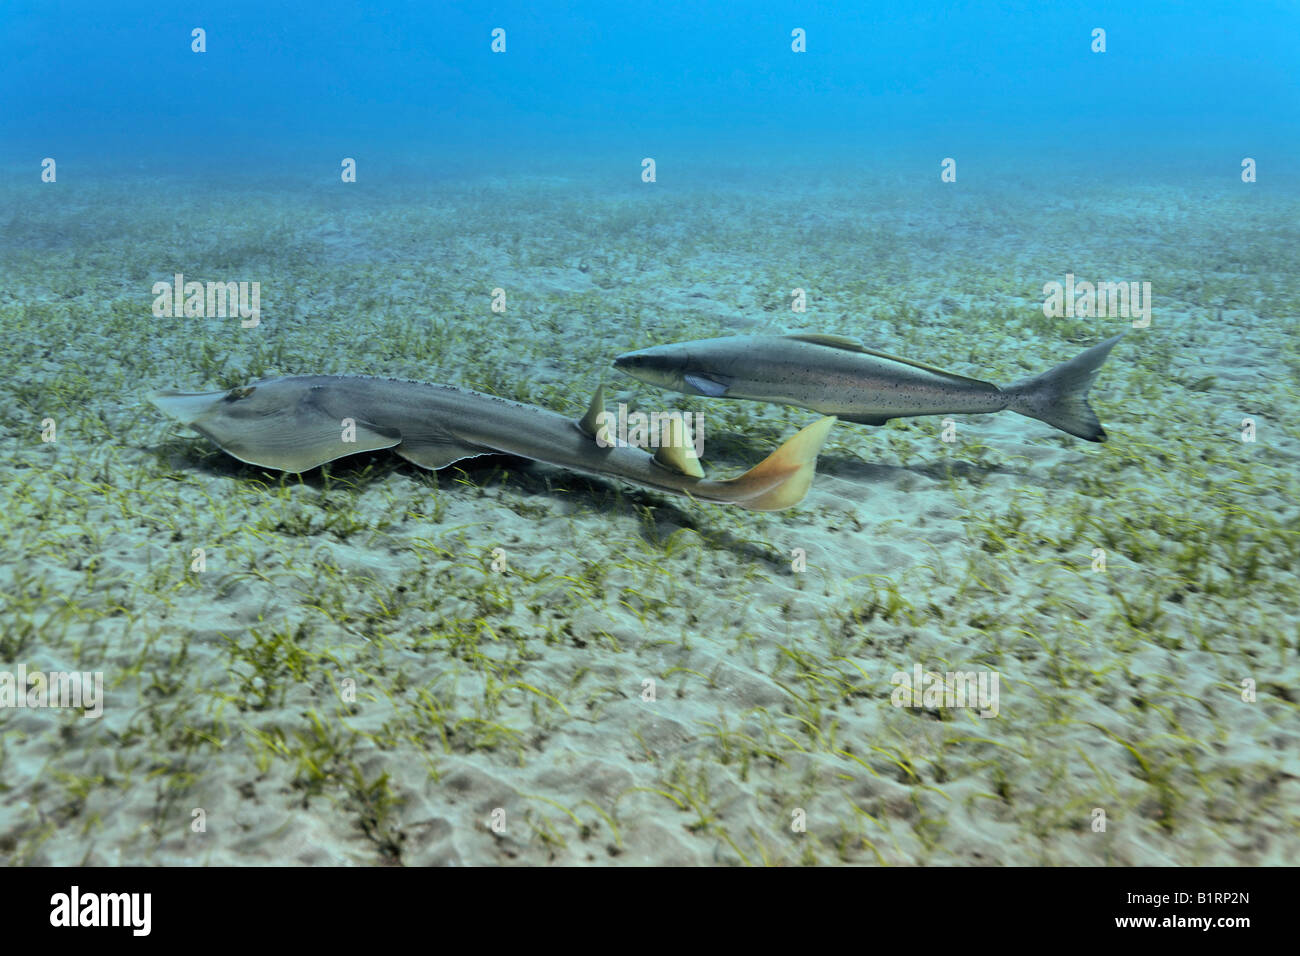 A Cobia or Black Kingfish (Rachycentron canadum) swimming beside a Common Guitarfish (Rhinobatos rhinobatos) over seaweed looki Stock Photo